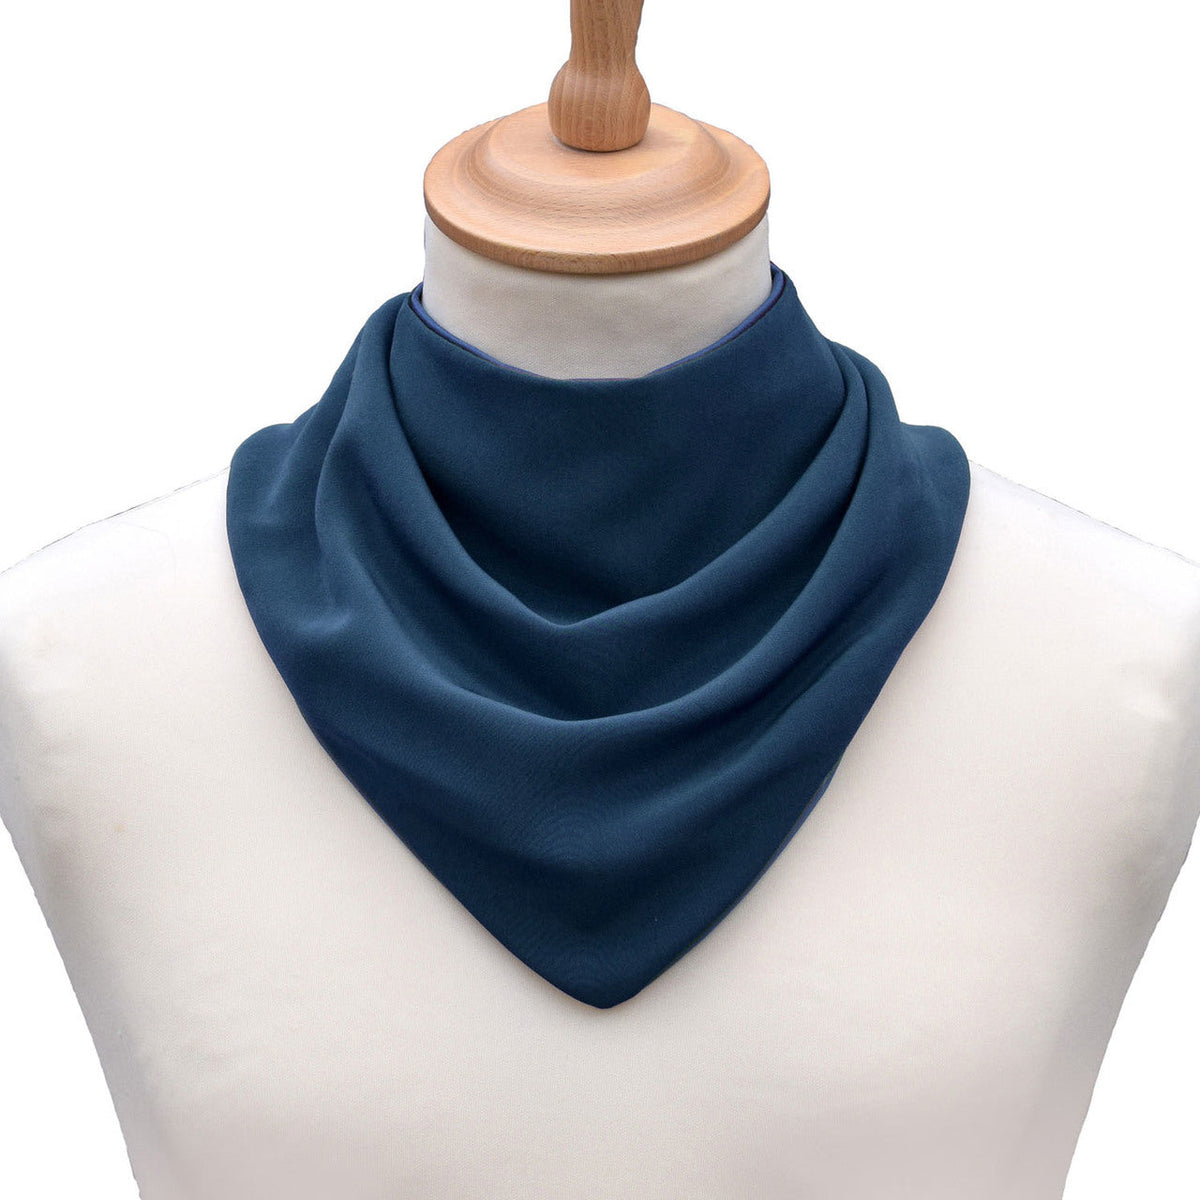 Neckerchief style dribble bib - Steel Blue (UK VAT Exempt) | Health Care | Care Designs